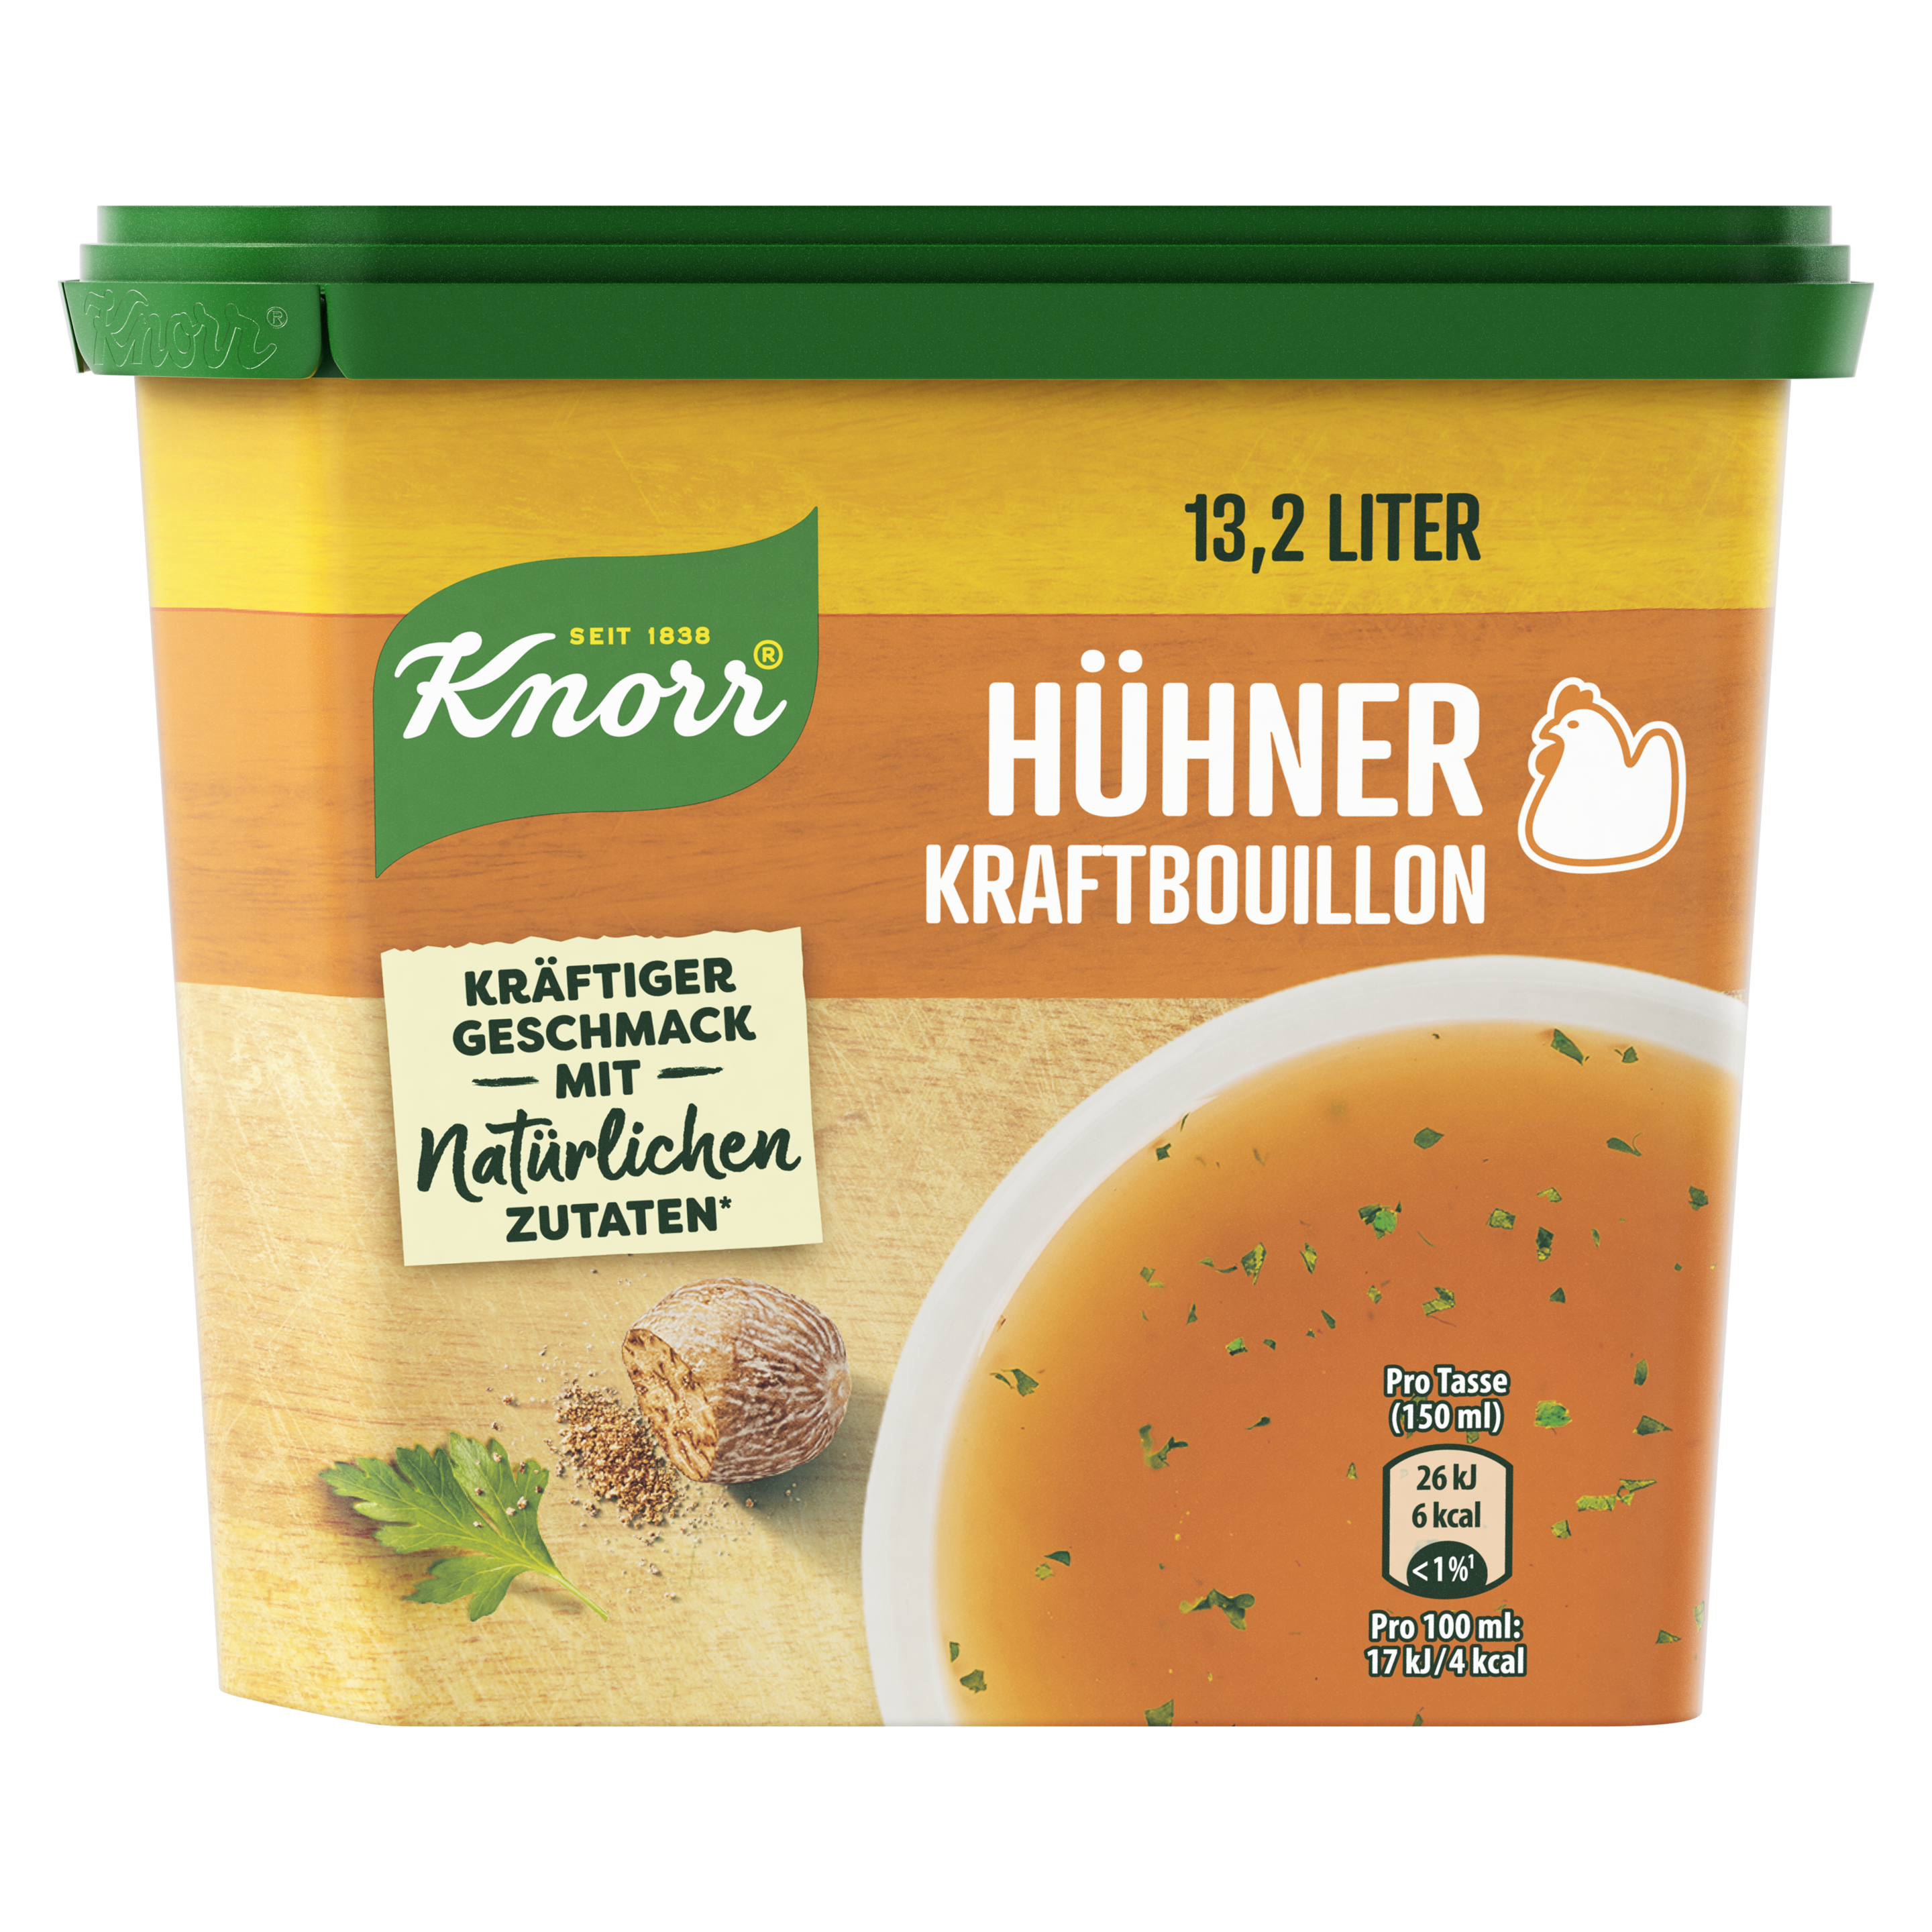 Knorr Hühner Kraftbouillon 13,2 Liter